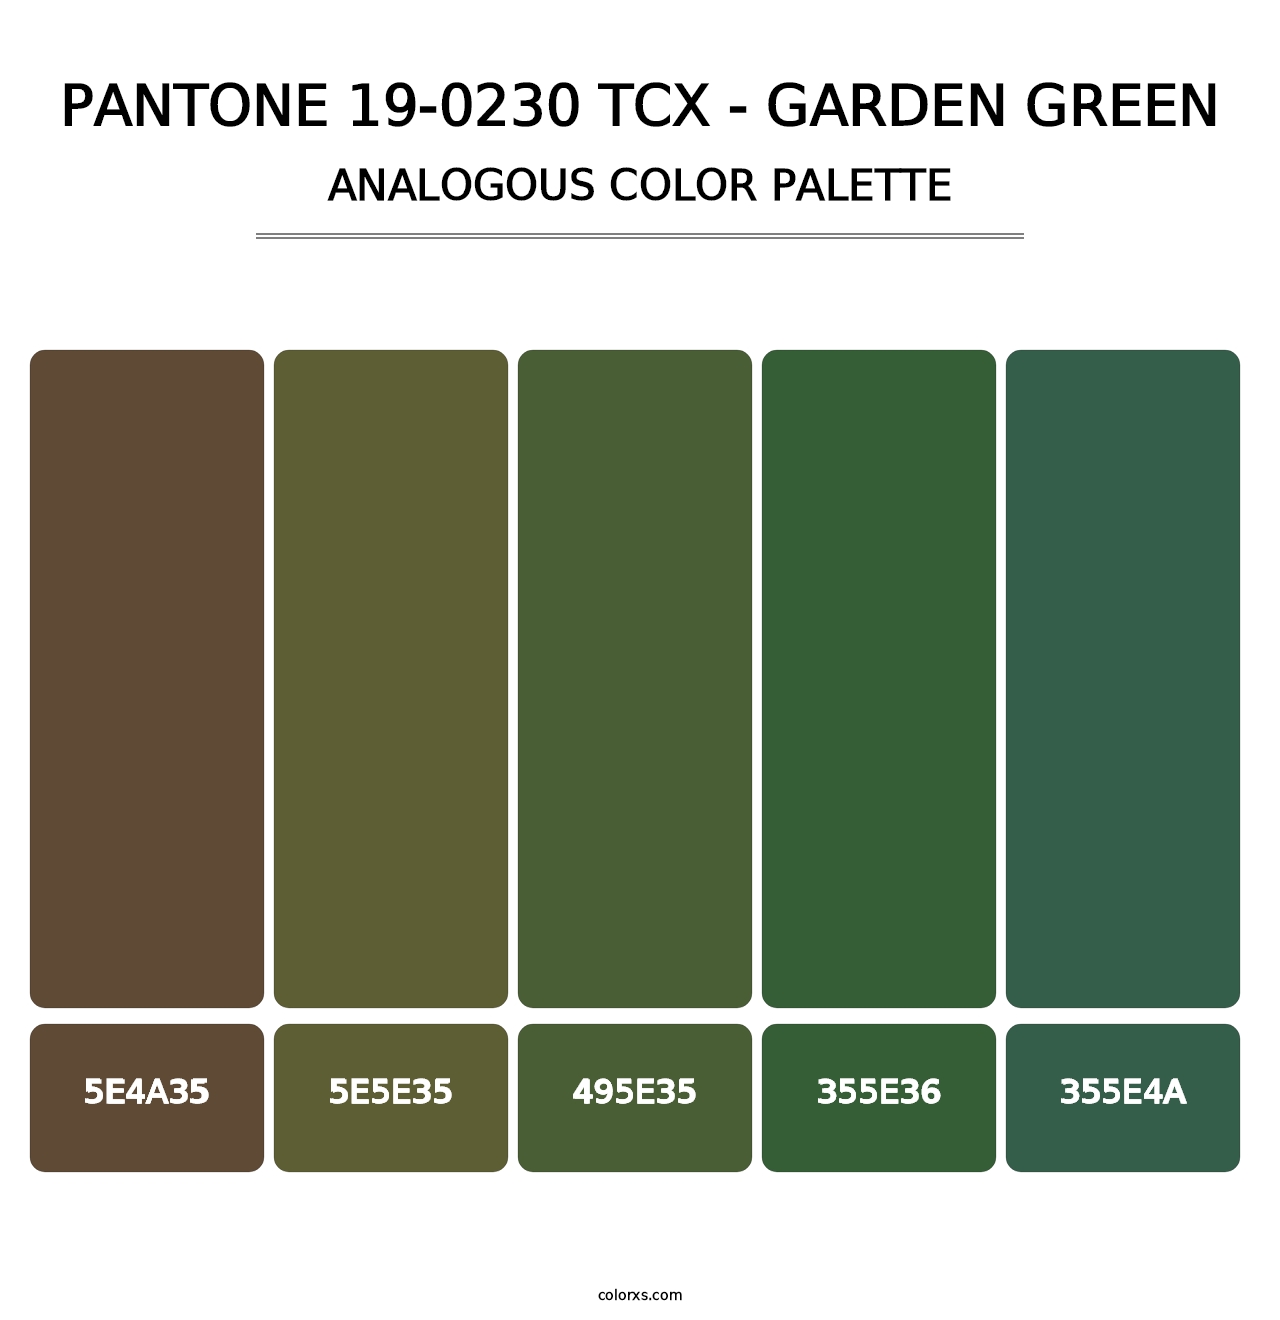 PANTONE 19-0230 TCX - Garden Green - Analogous Color Palette